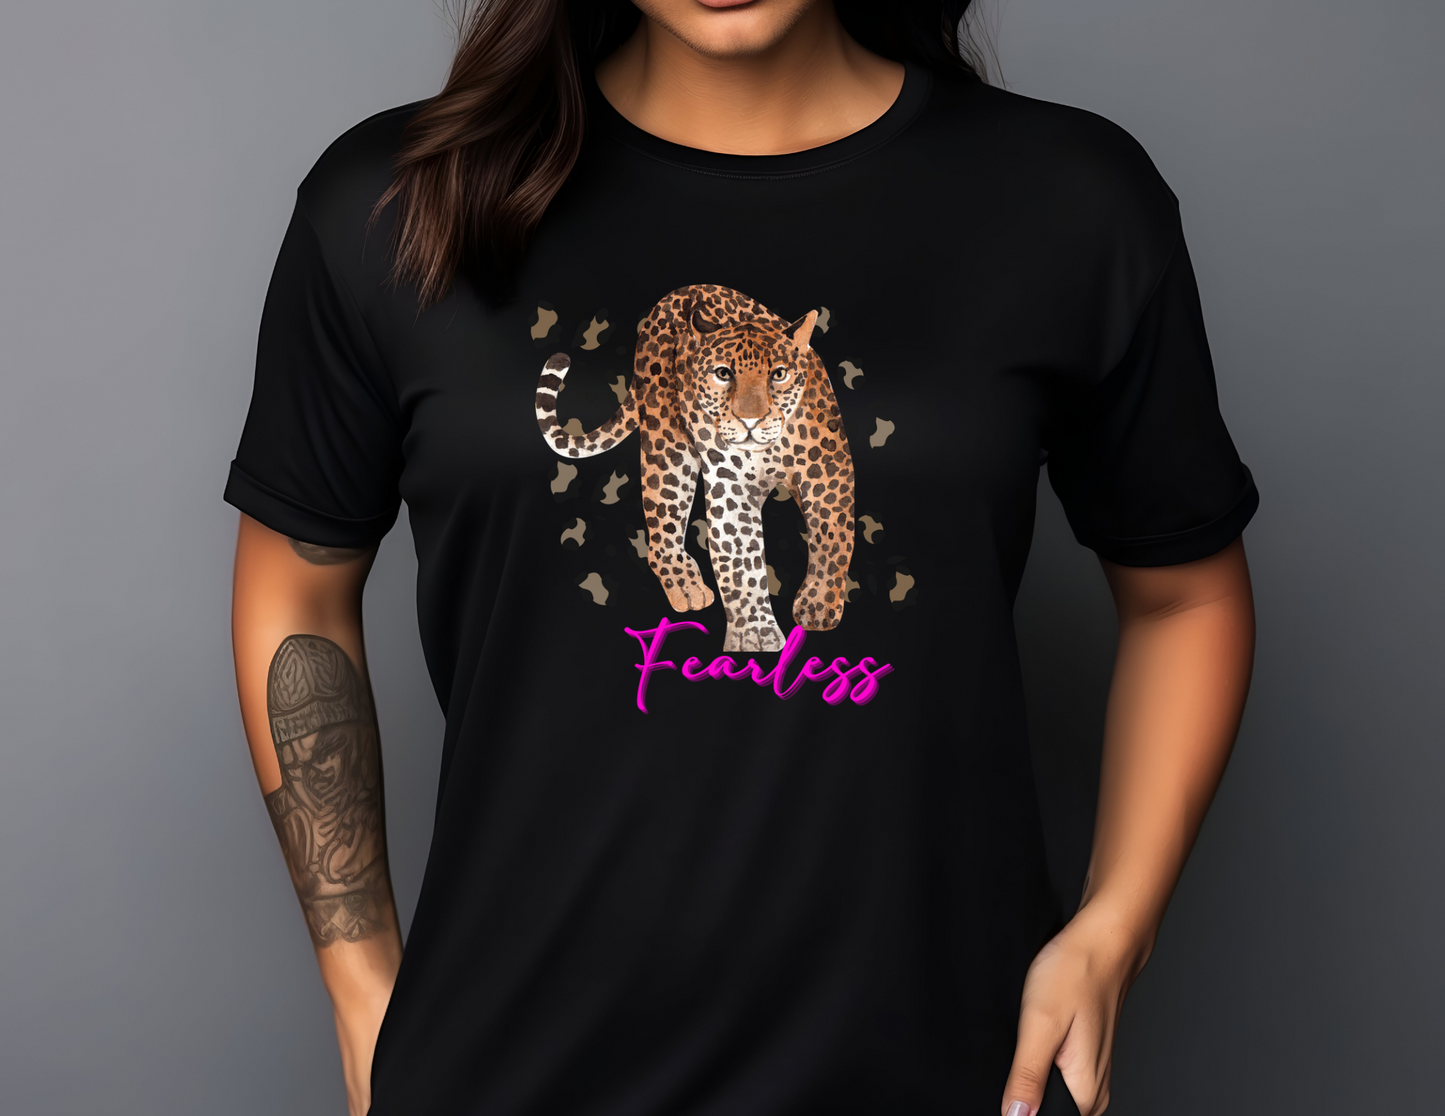 Fearless Boujee Cute Stylish Cheetah Leopard